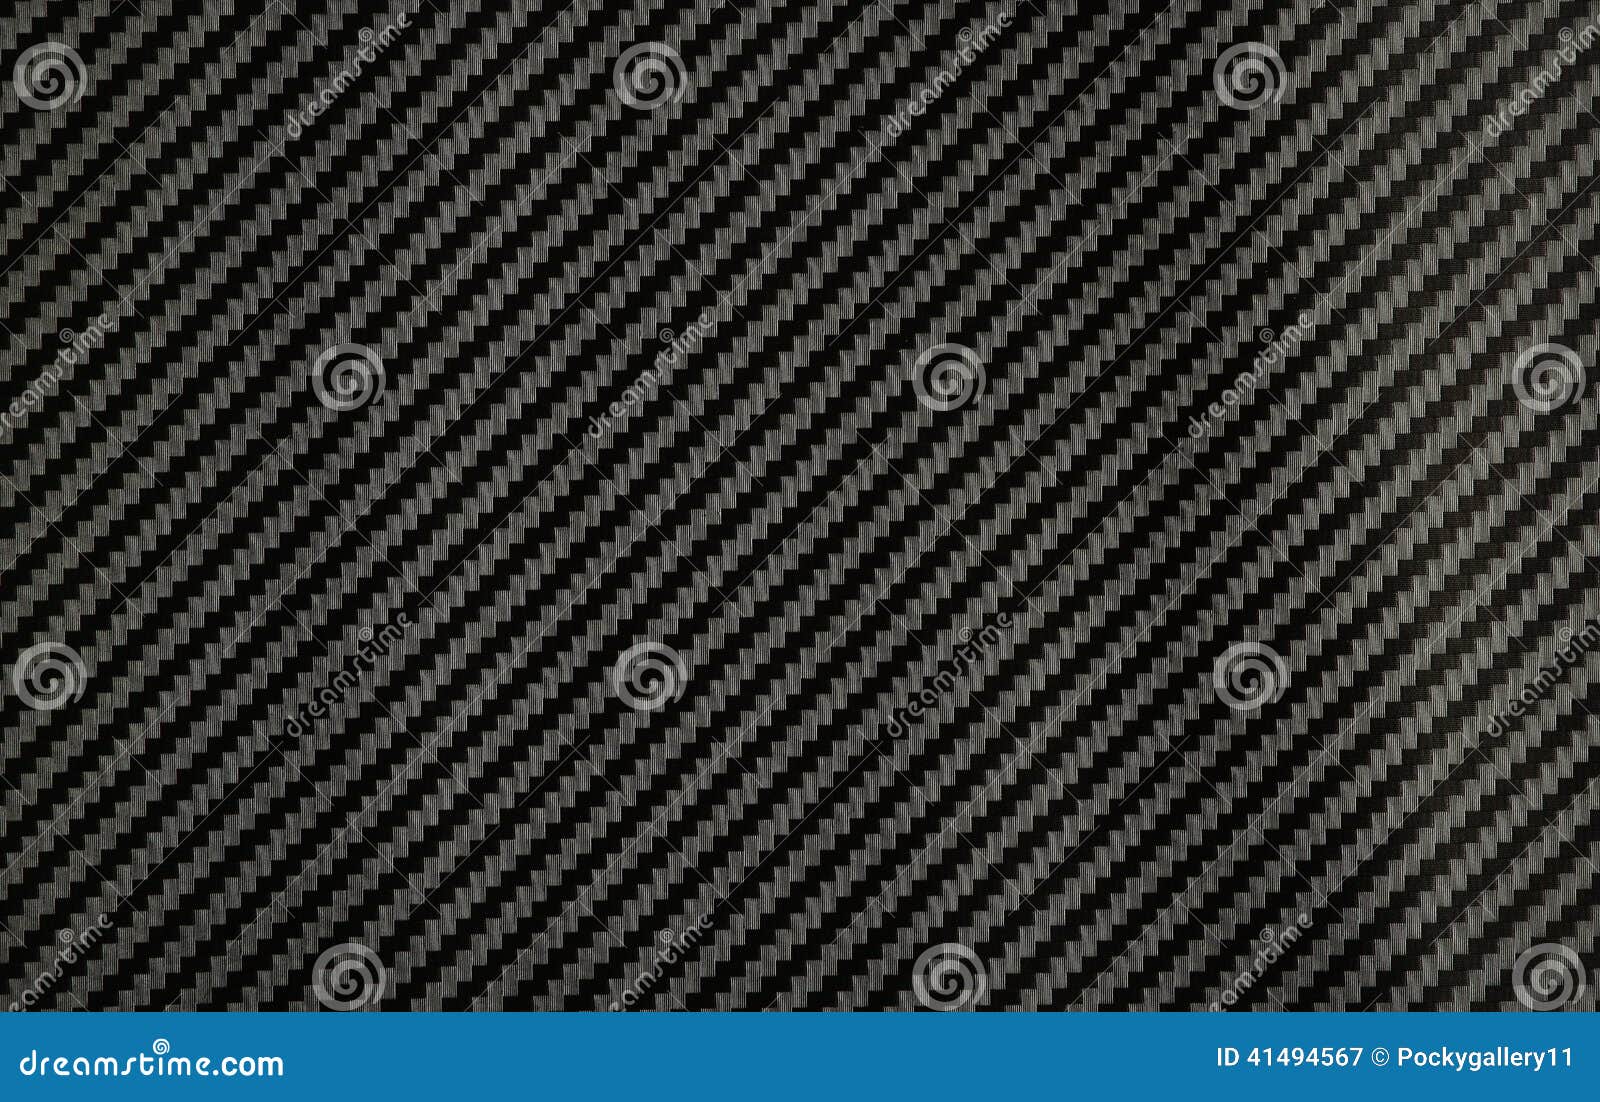 texture of carbon fiber sticker